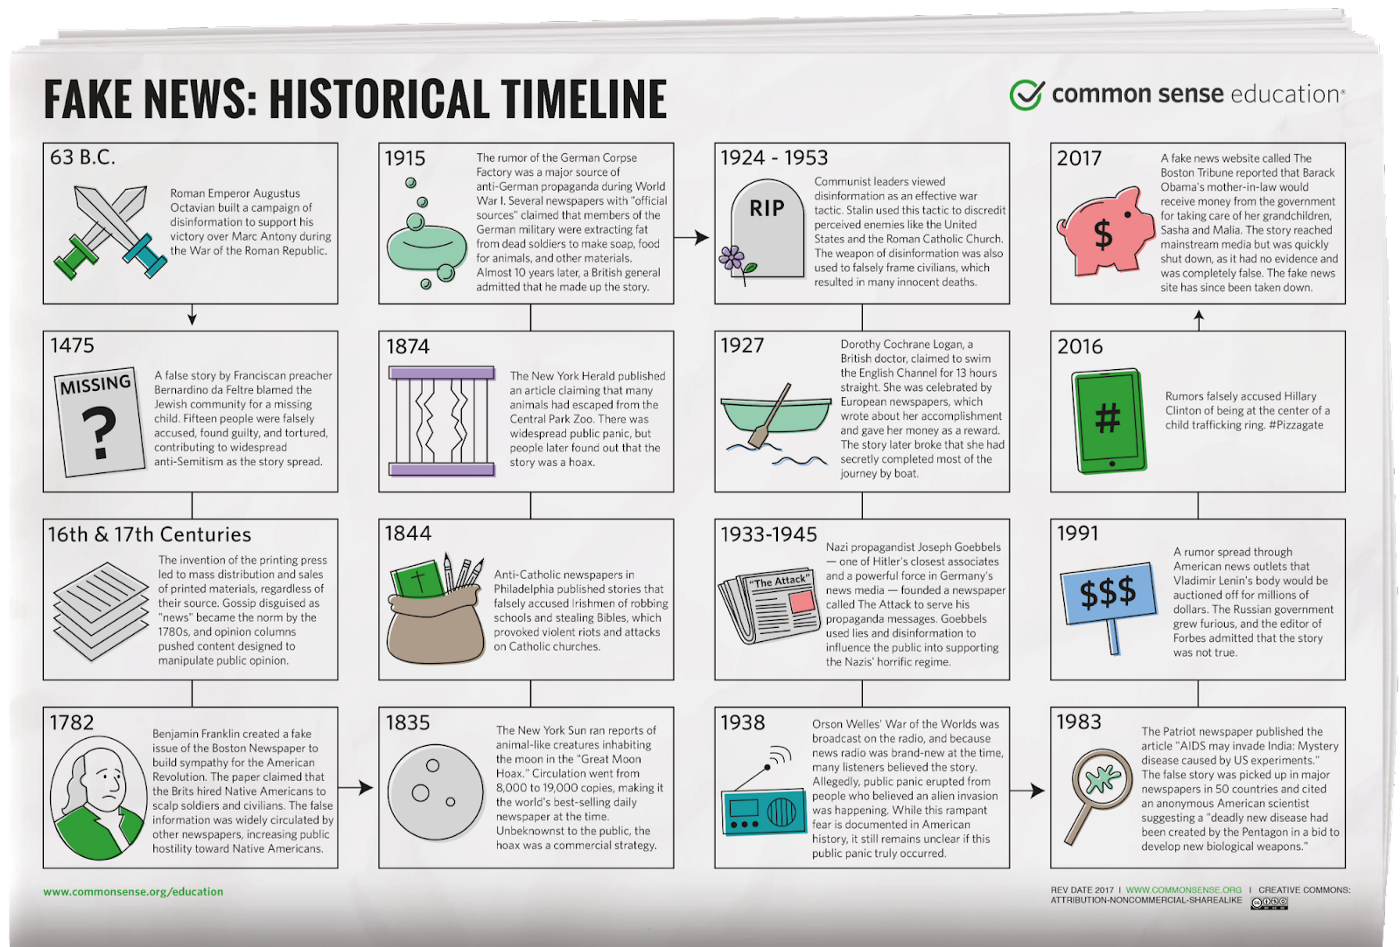 Chronology of some historical fake news